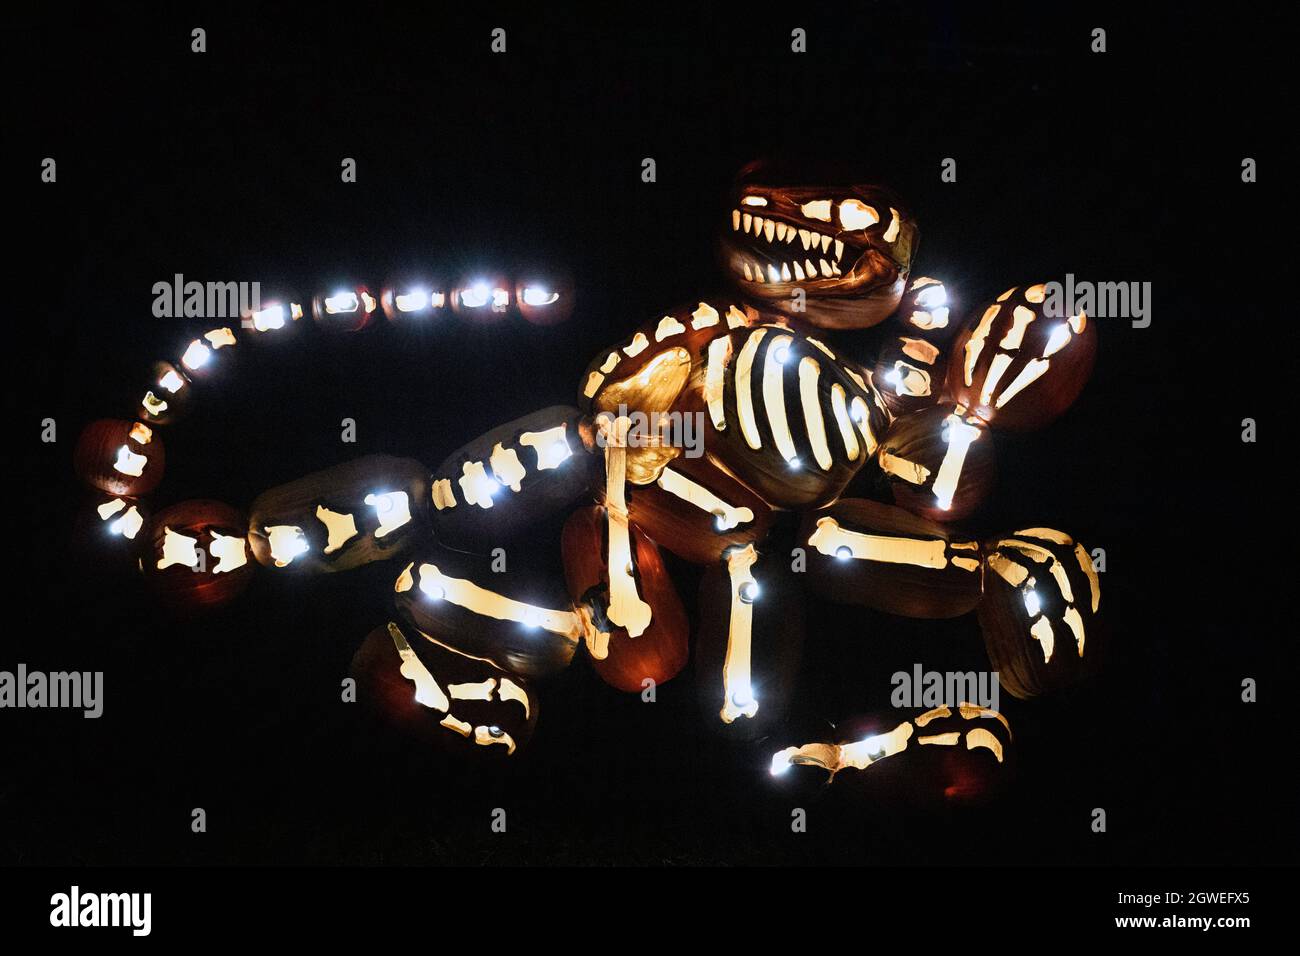 Illuminated light sculpture of a fantasy dinosaur for Halloween decorations or display. Calgary Alberta Canada Stock Photo